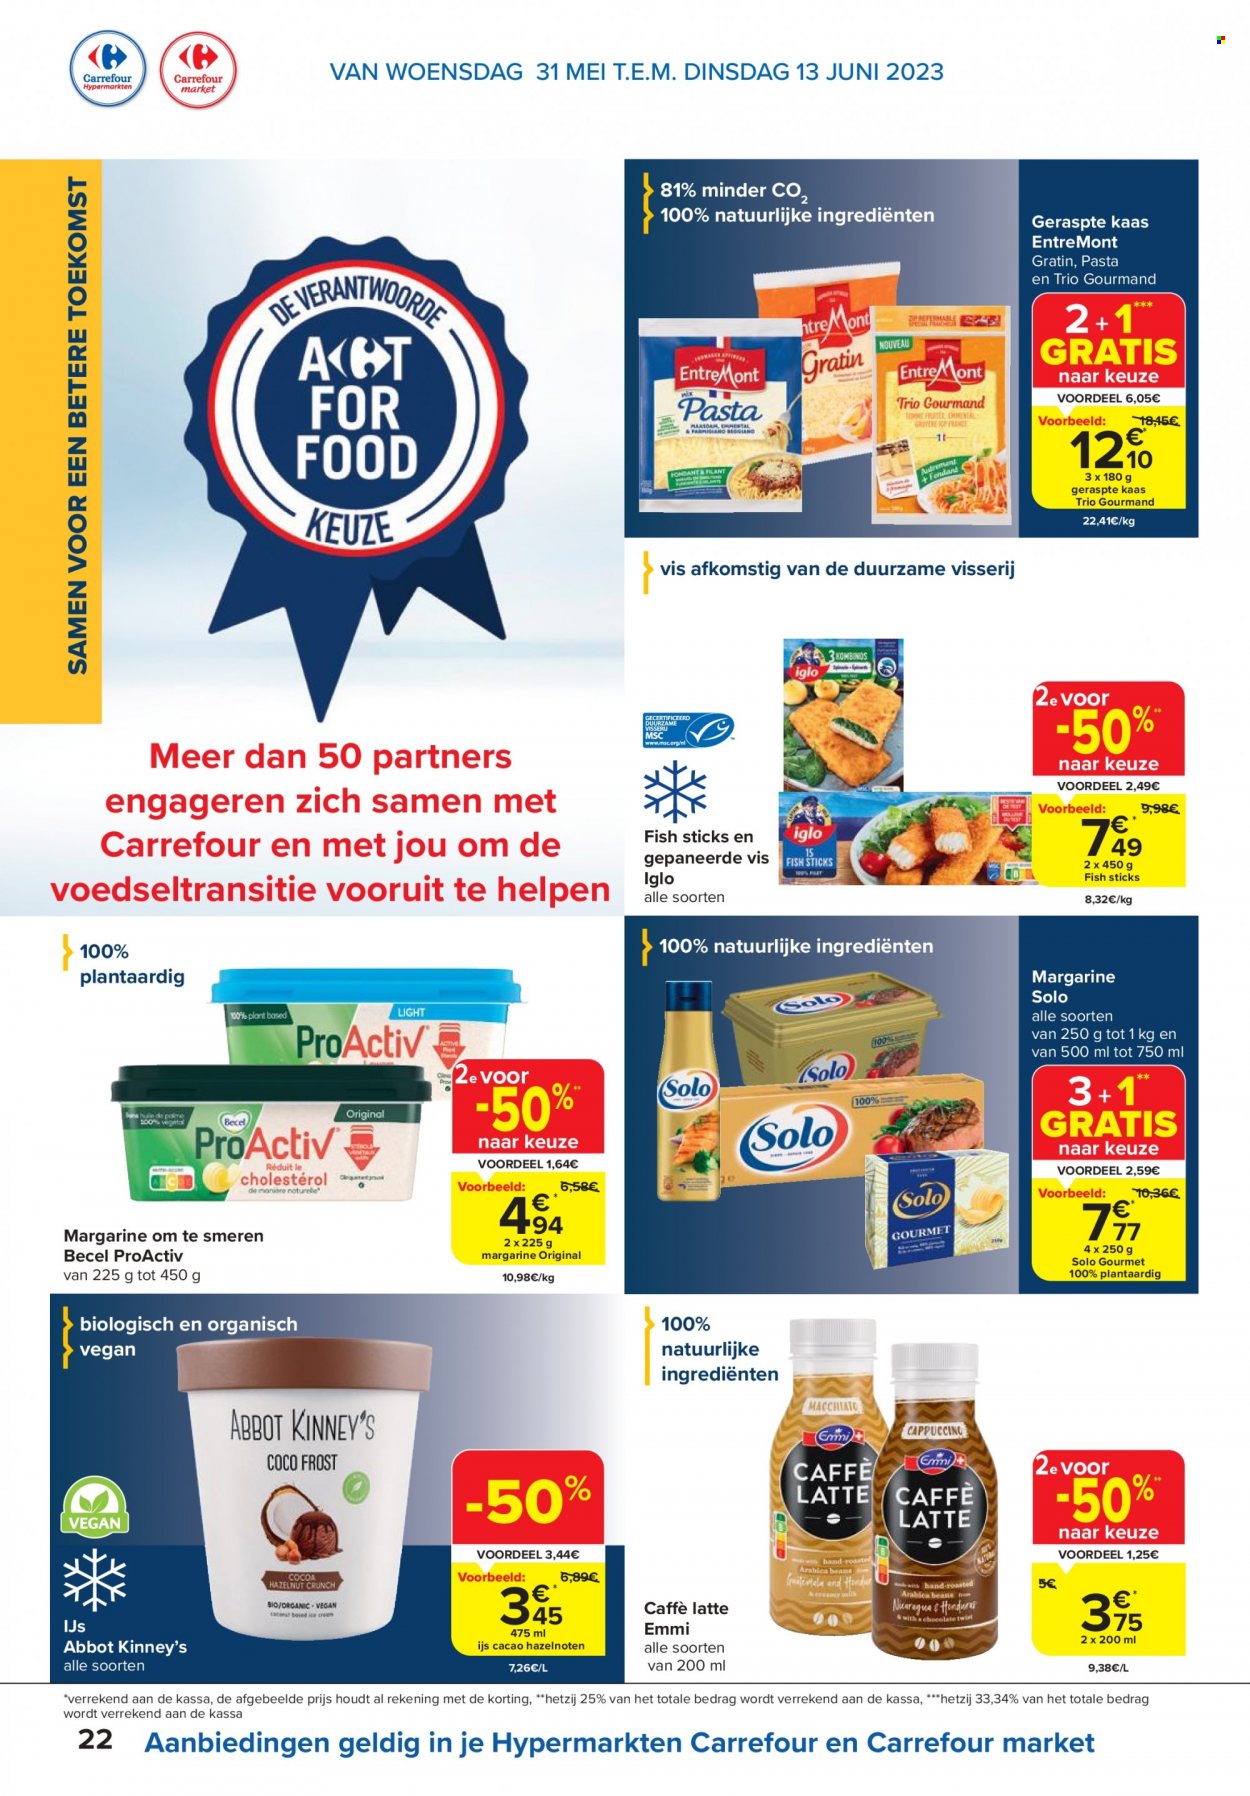 thumbnail - Carrefour-aanbieding - 31/05/2023 - 13/06/2023 -  producten in de aanbieding - Veggie, kaas, geraspte kaas, Ijs, Iglo, pasta, hazelnoten. Pagina 22.